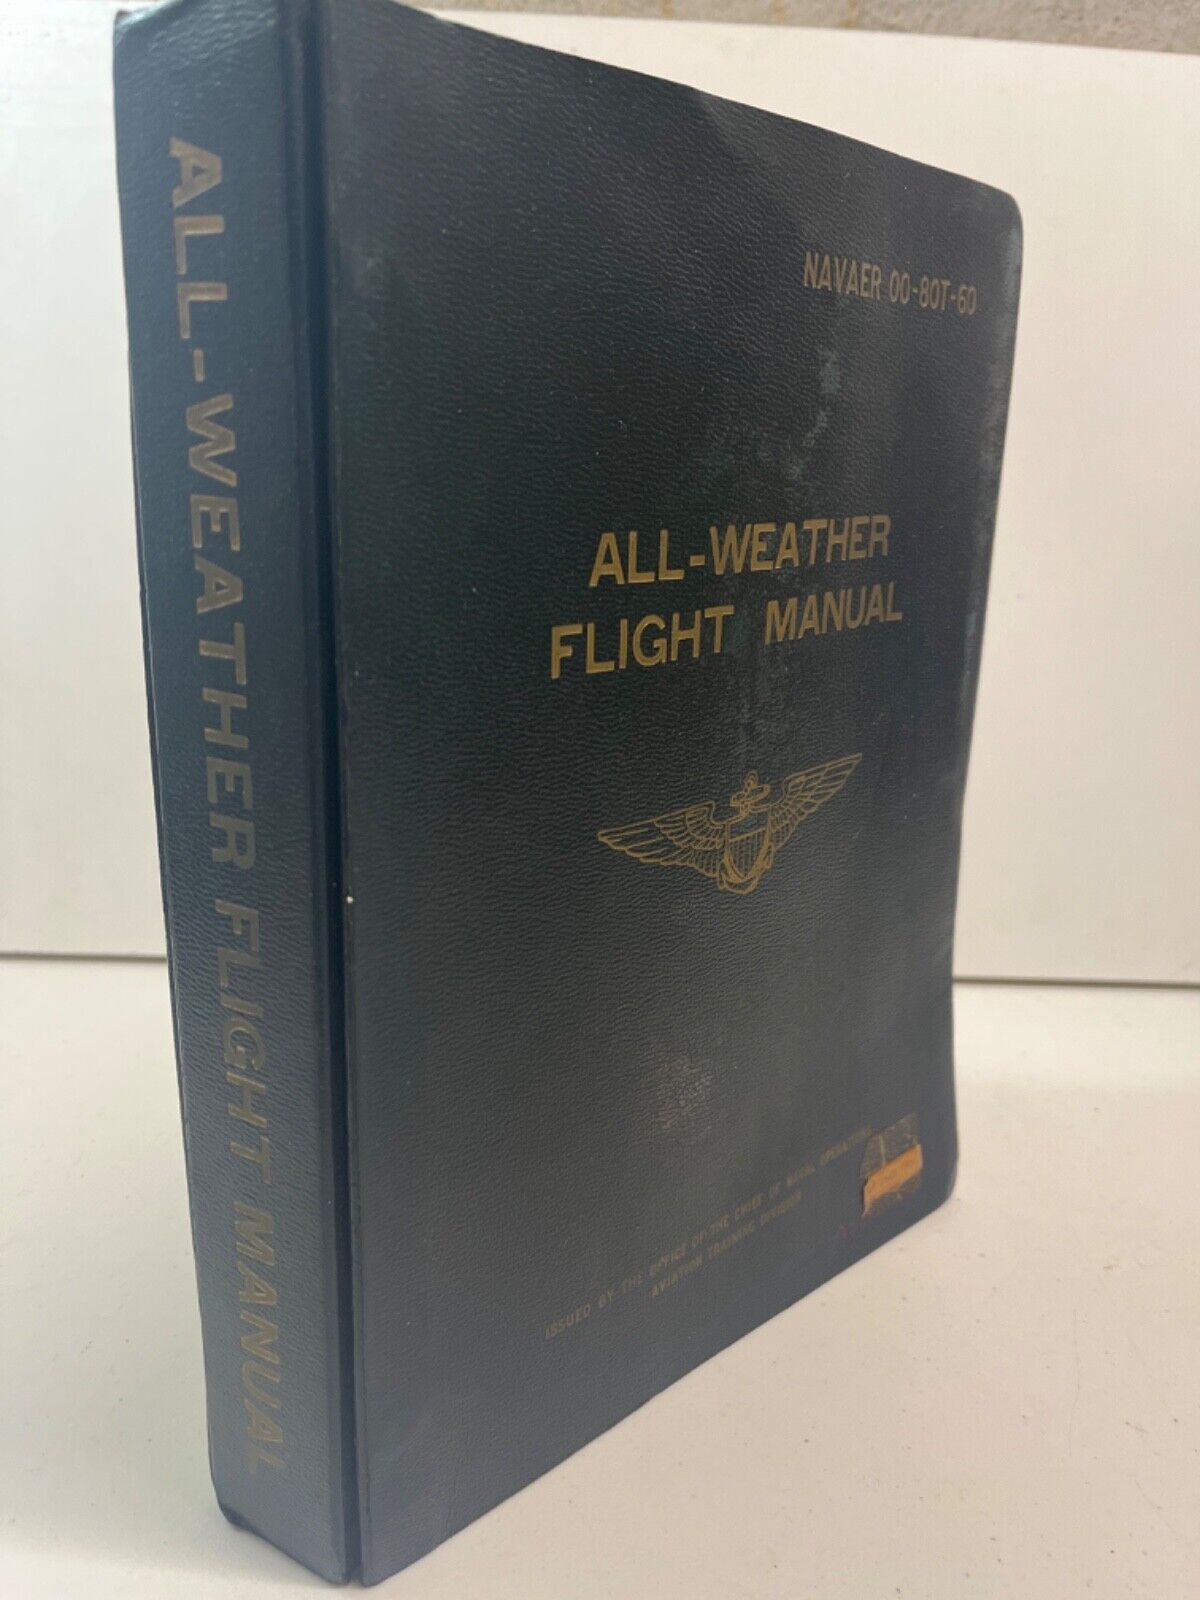 Vintage 1961 US NAVY All Weather Flight Book NAVAER 00-8OT-60